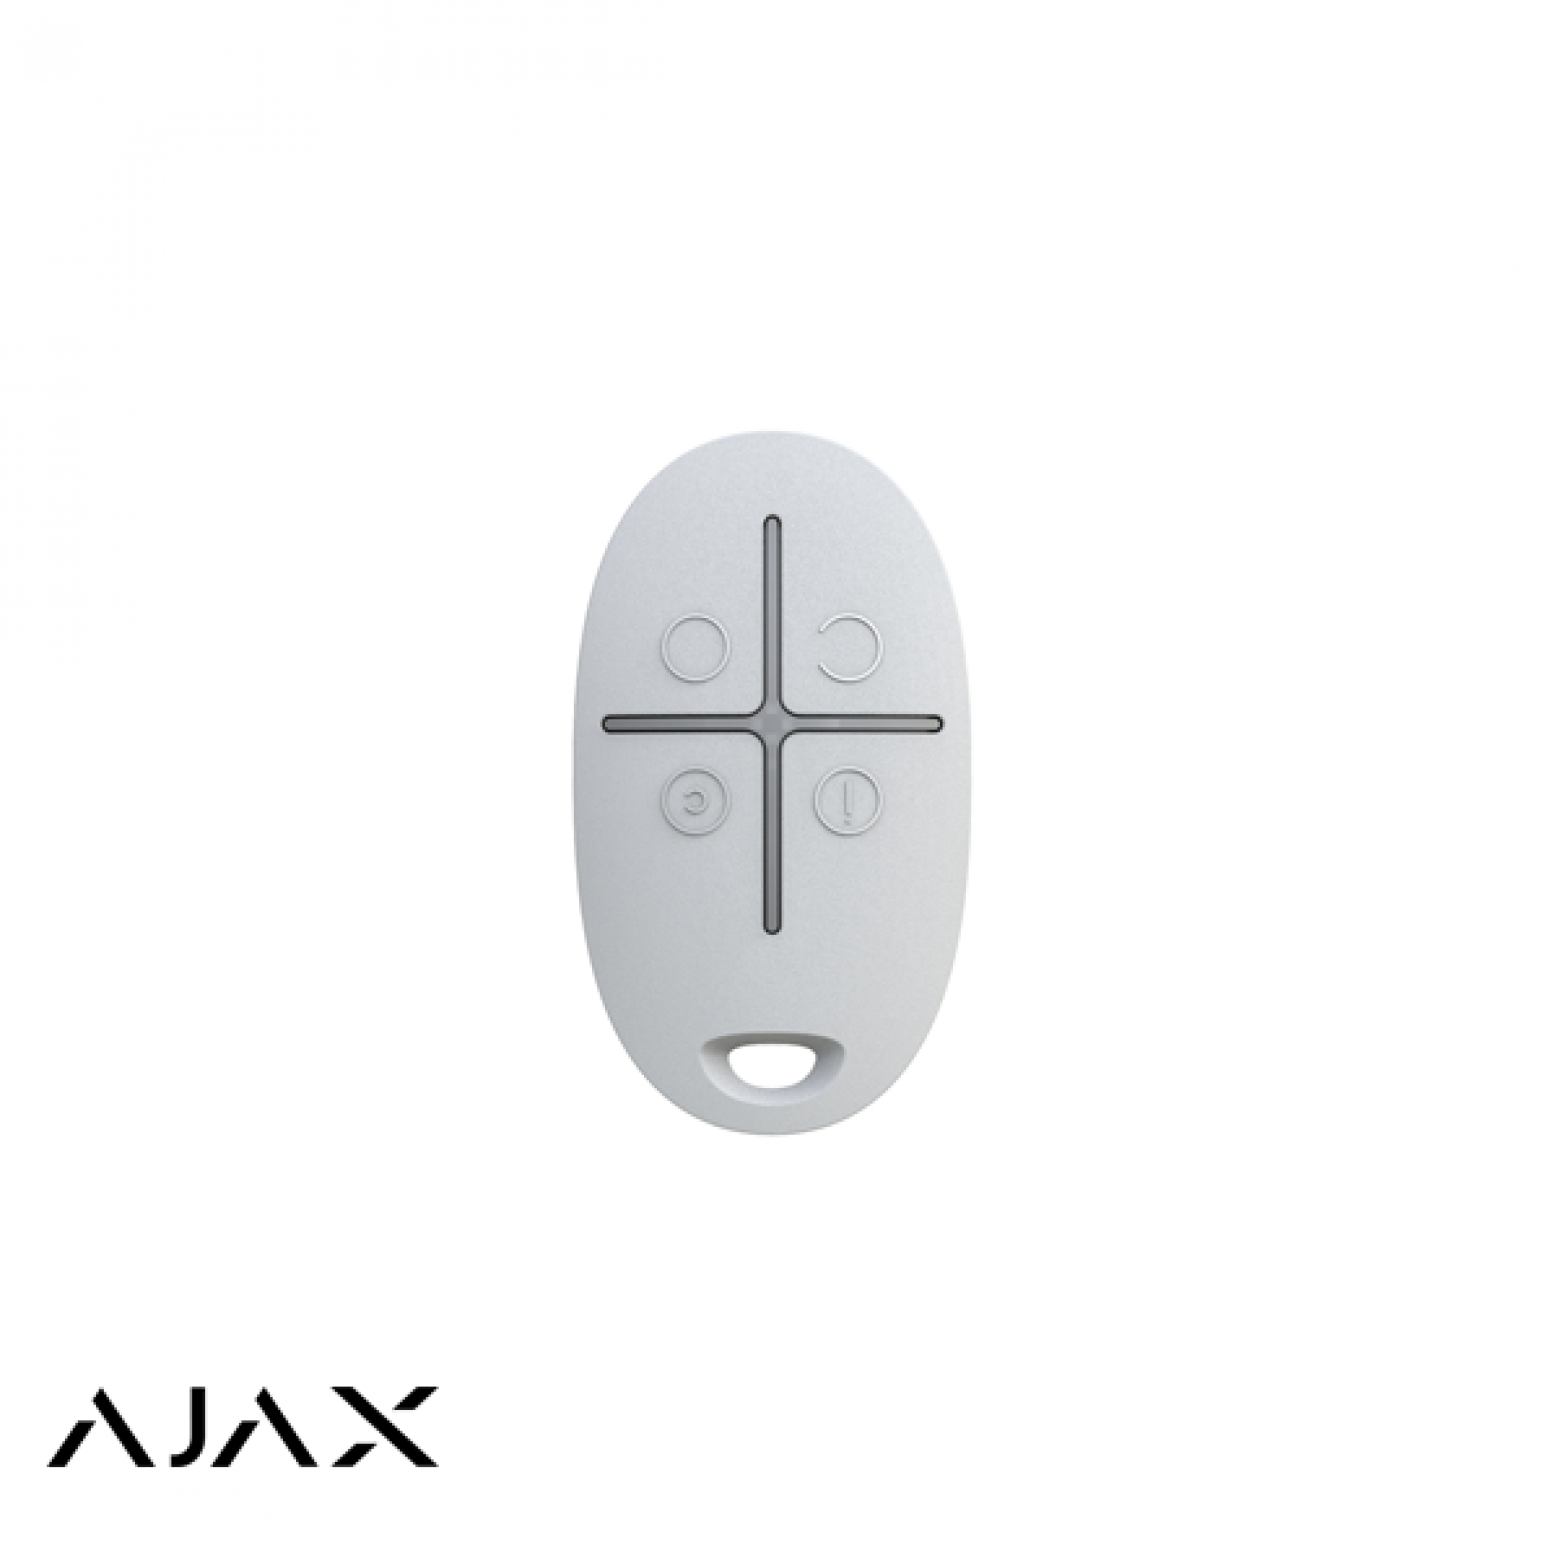 AJAX SpaceControl draadloze afstandsbediening